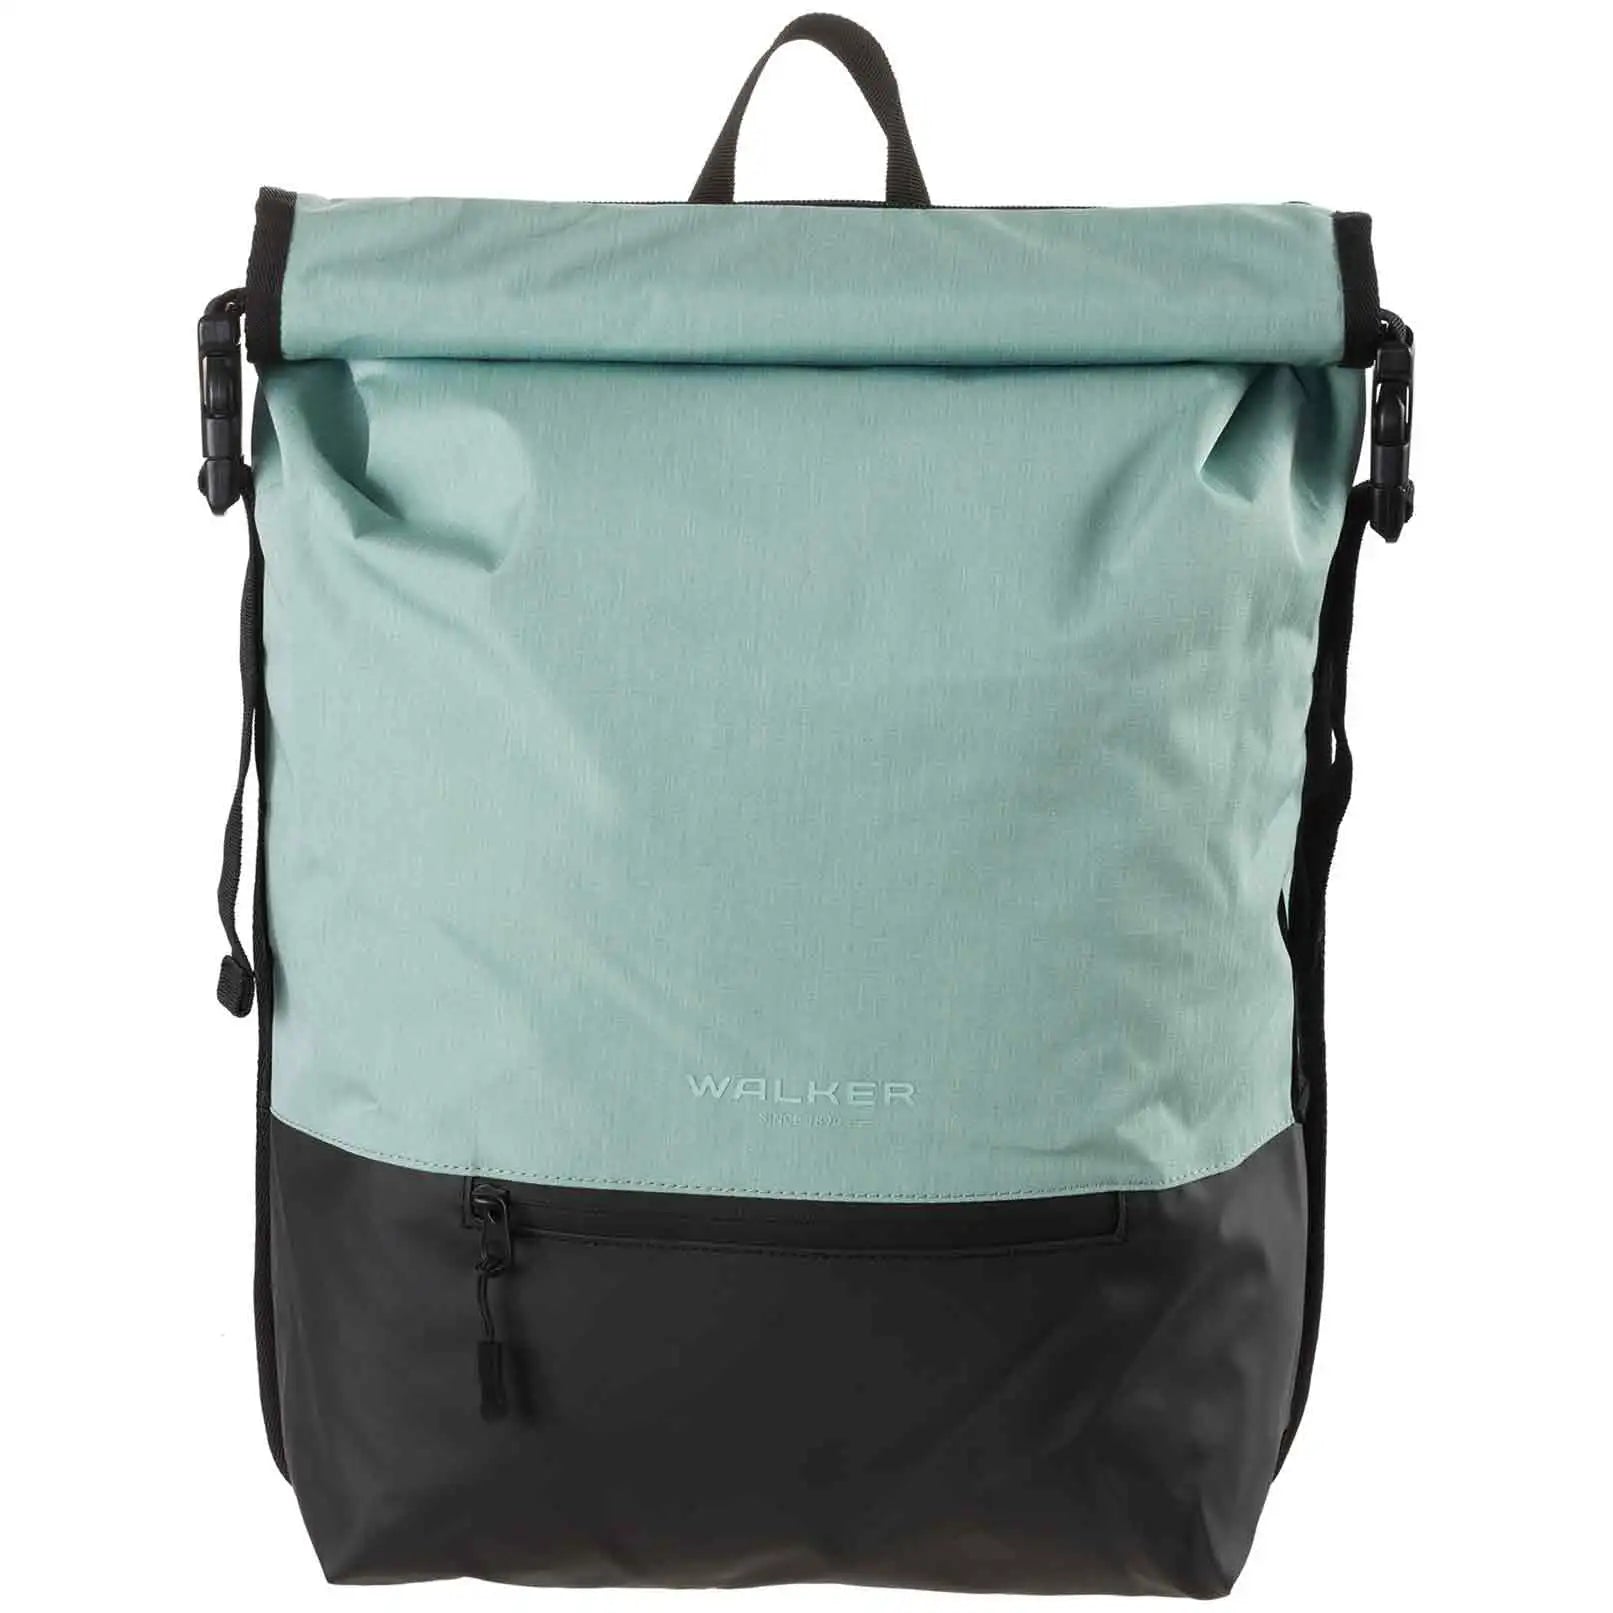 Walker Mika Concept Lifestyle Backpack 44 cm - Malibu